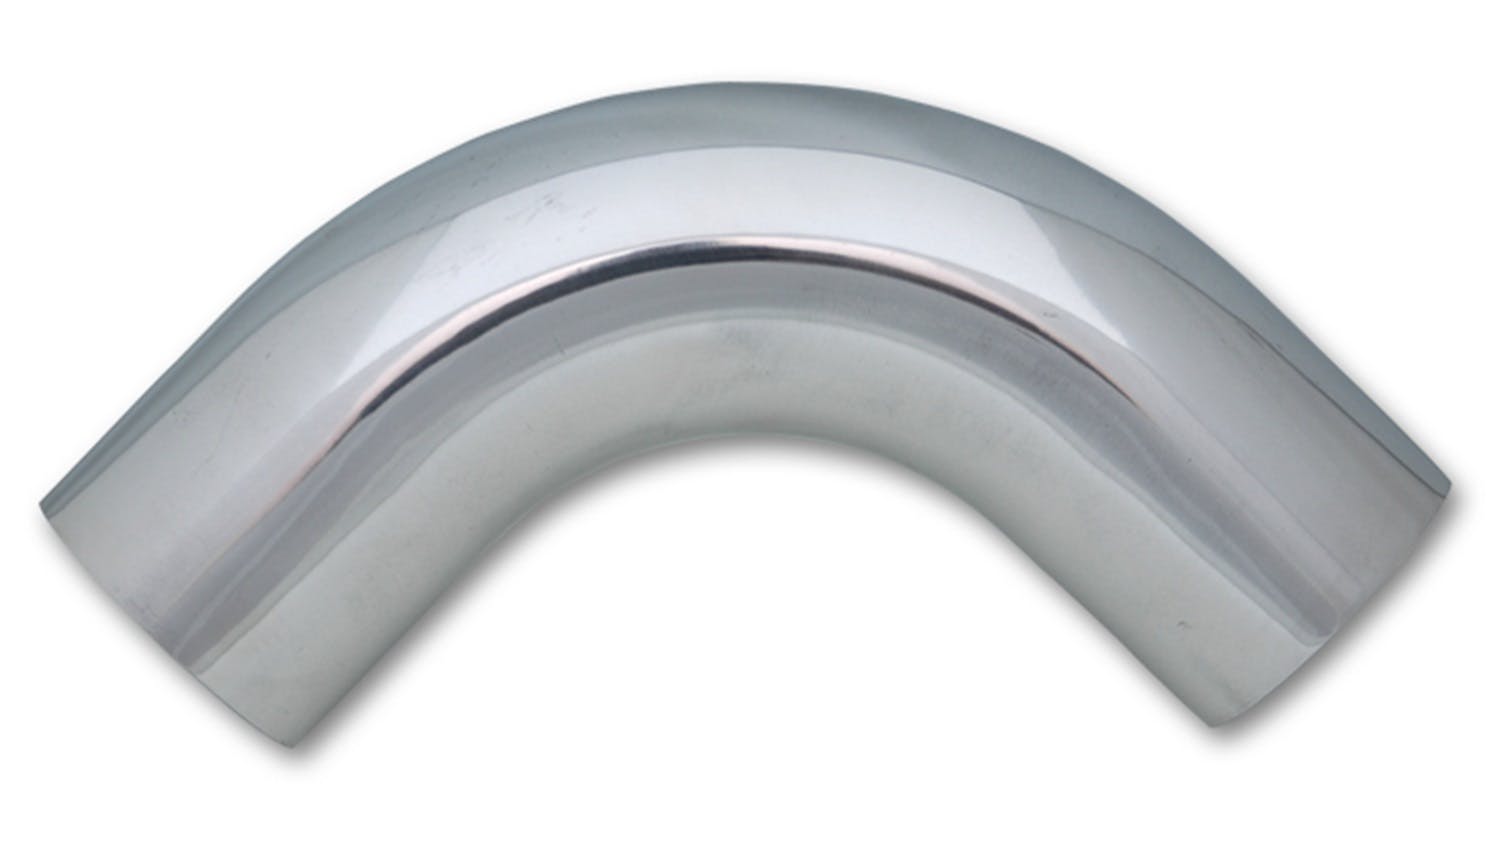 Vibrant Performance 2178 2.5 inch O.D. Aluminum 90 Degree Bend - Polished